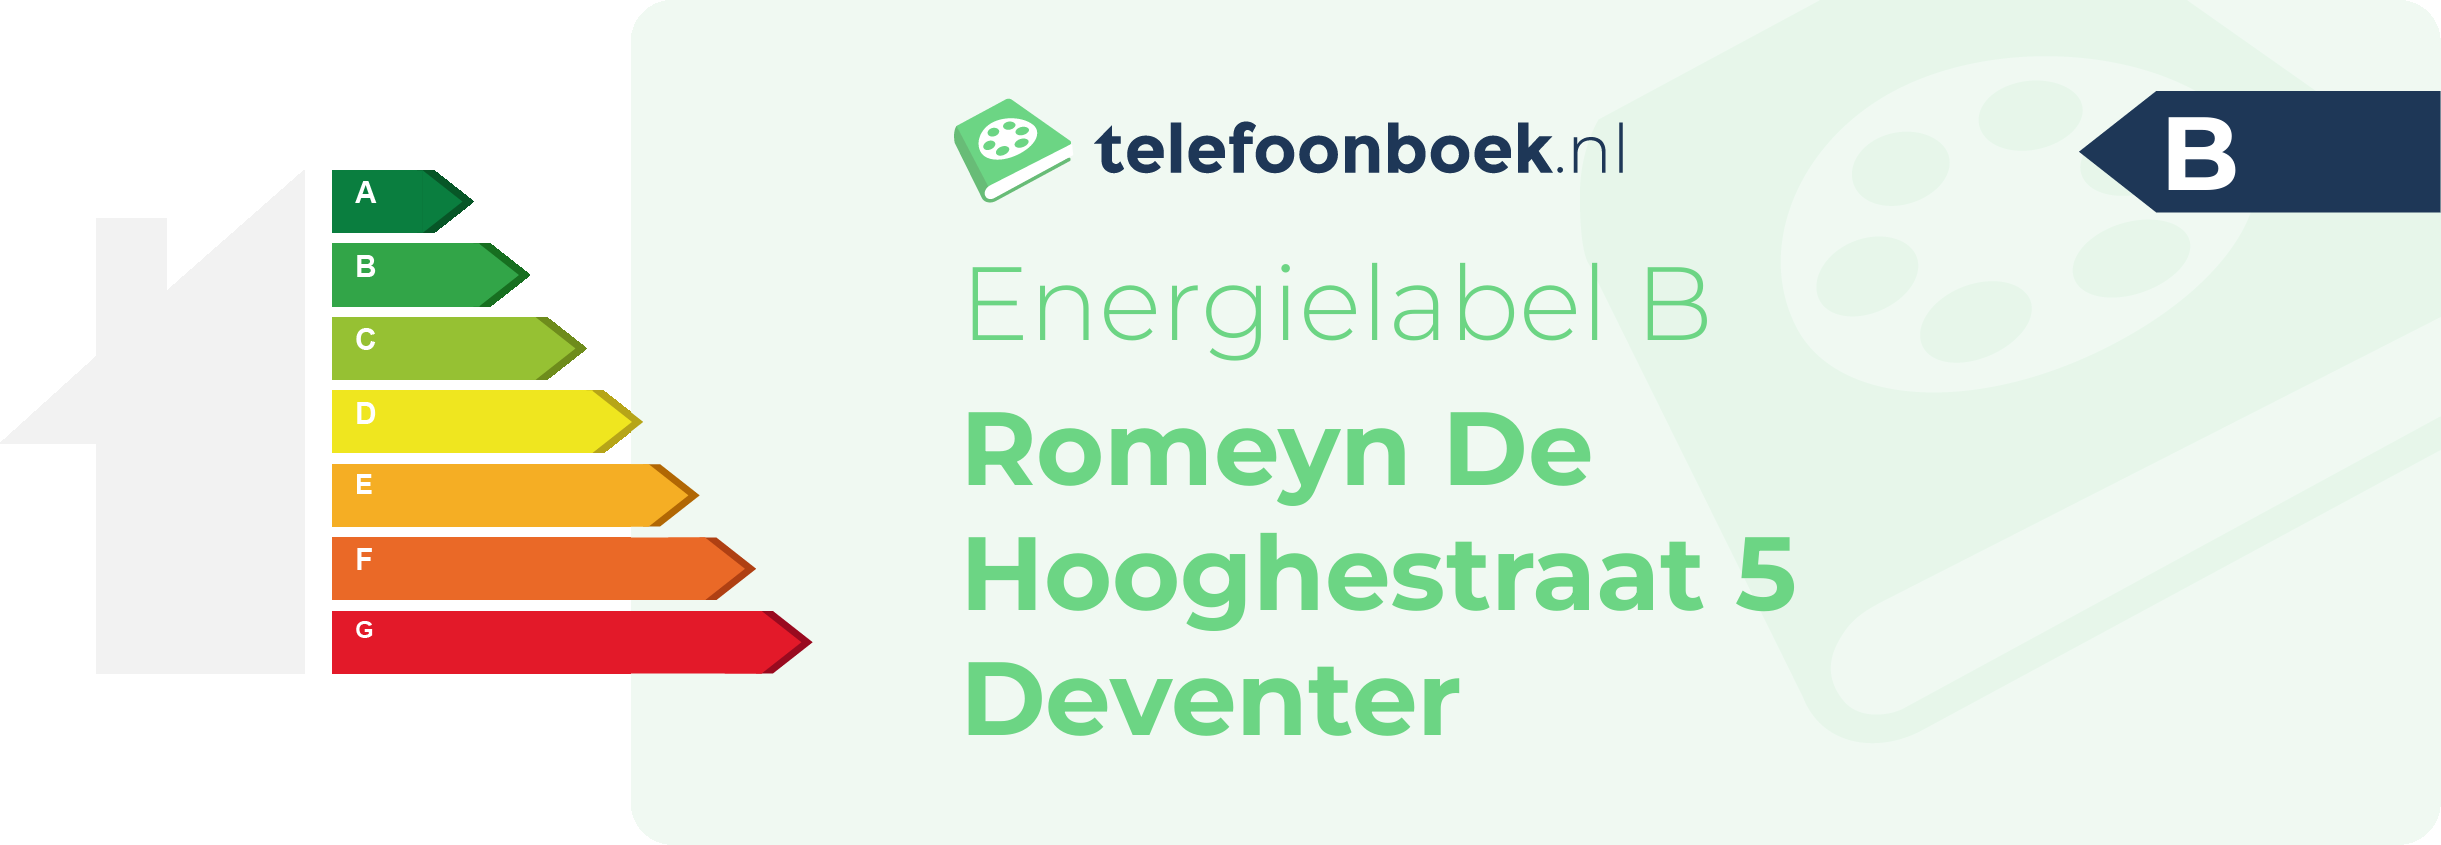 Energielabel Romeyn De Hooghestraat 5 Deventer